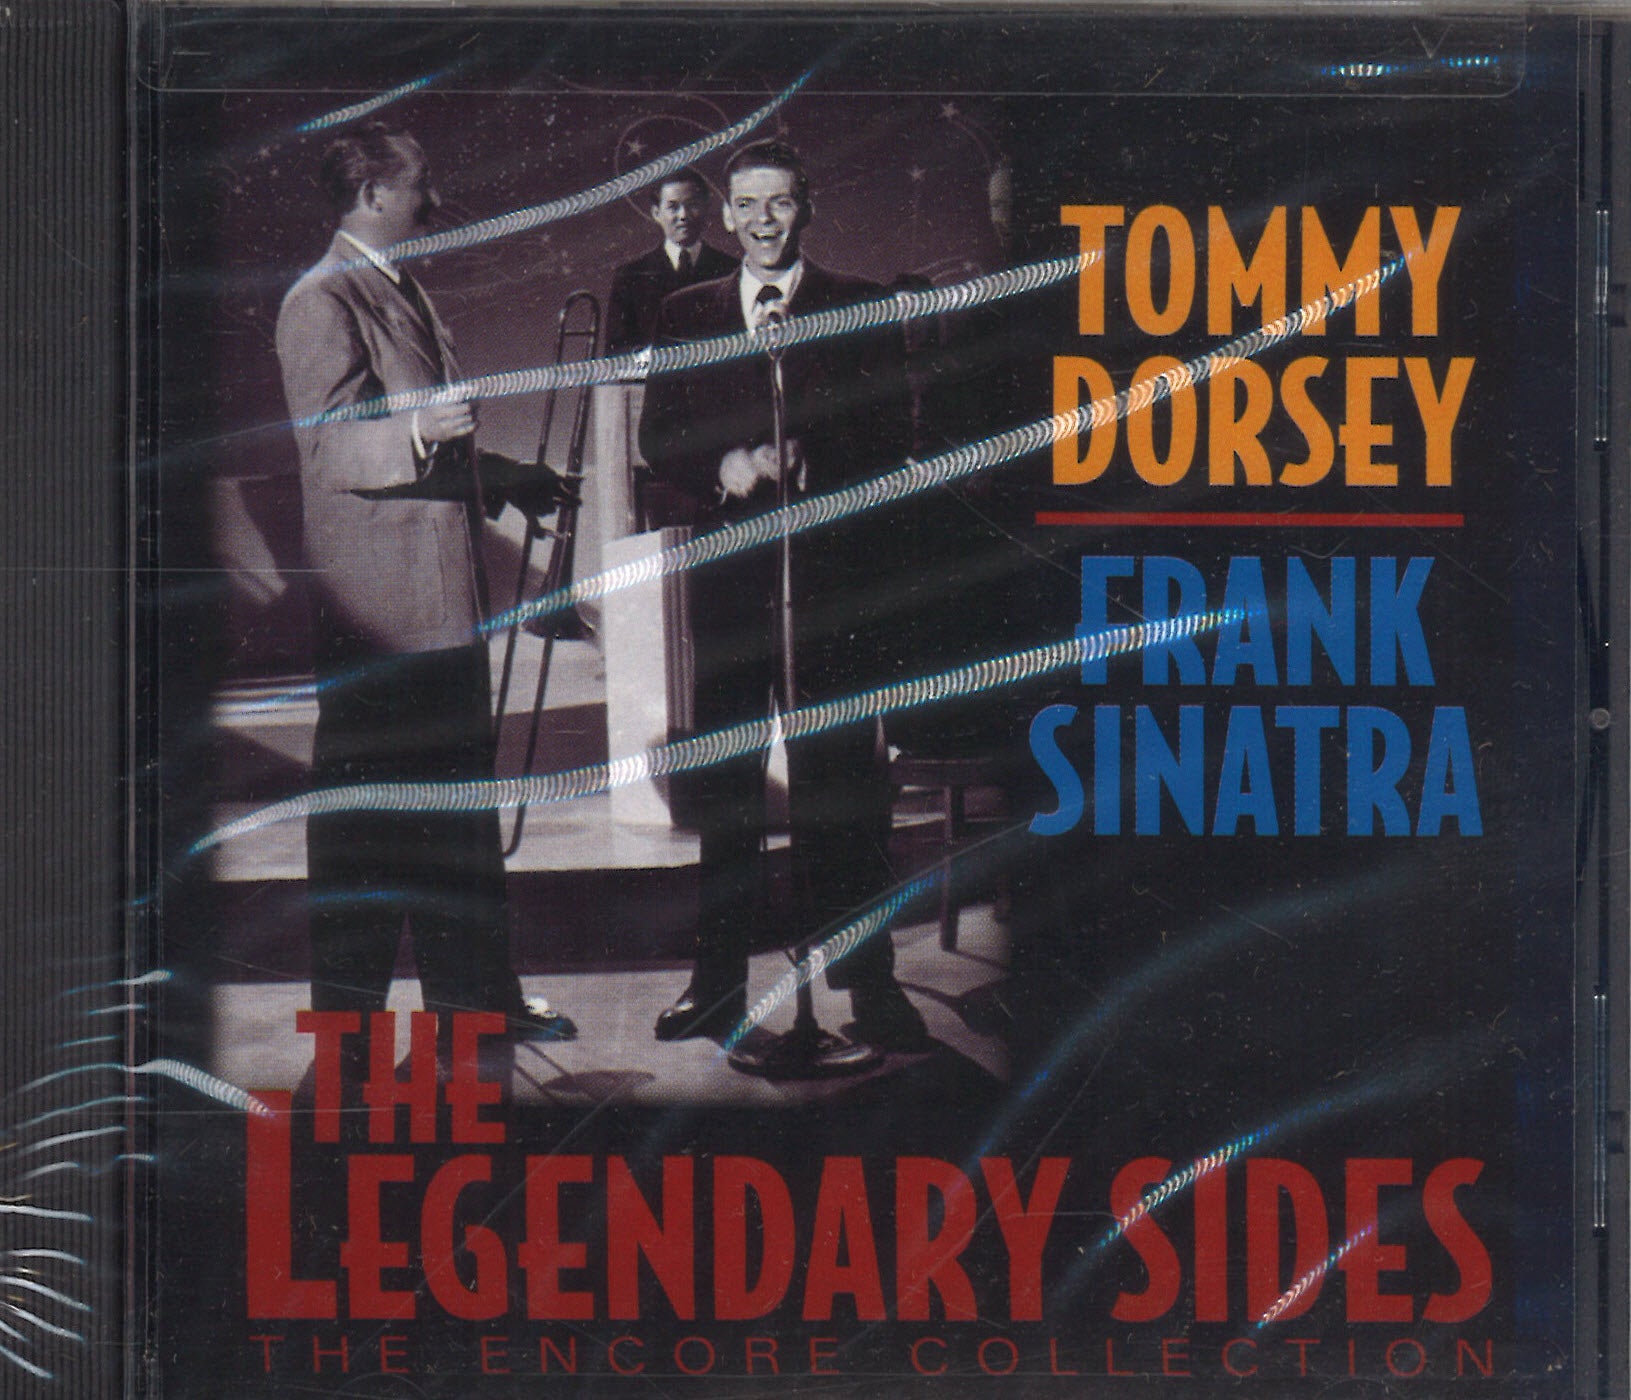 Frank Sinatra & Tommy Dorsey The Legendary Sides